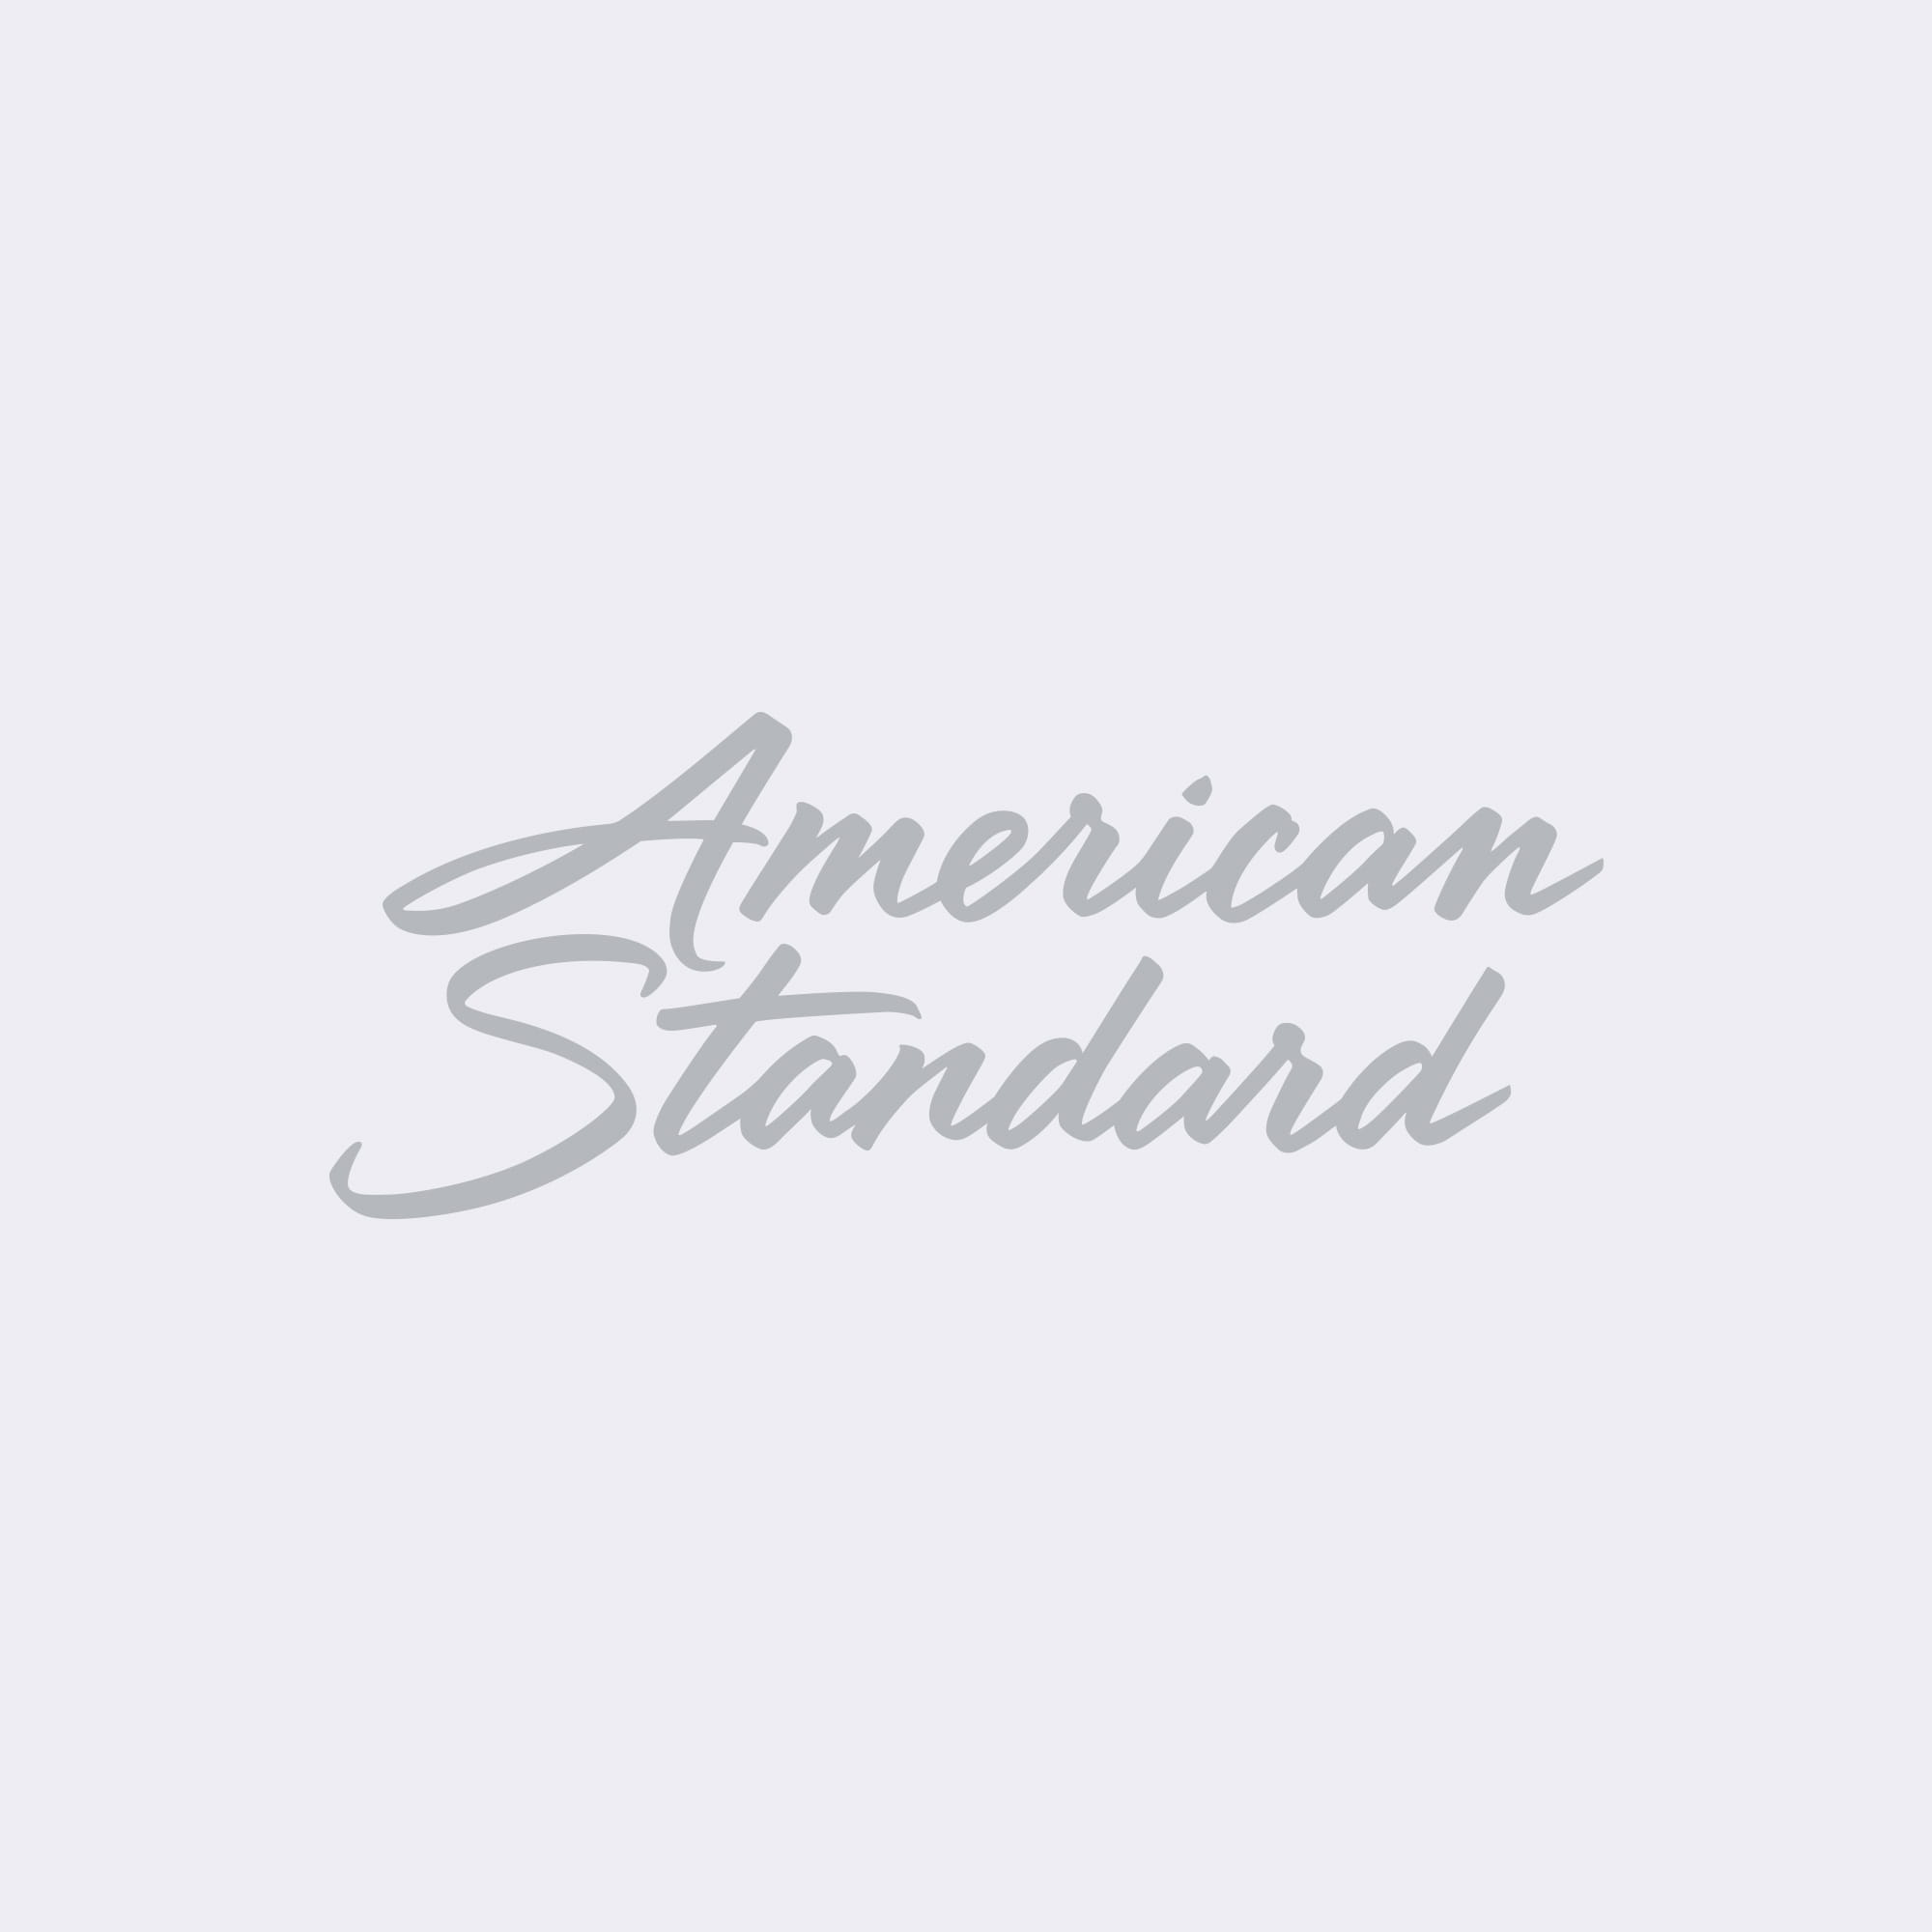 American Standard Image Placeholder